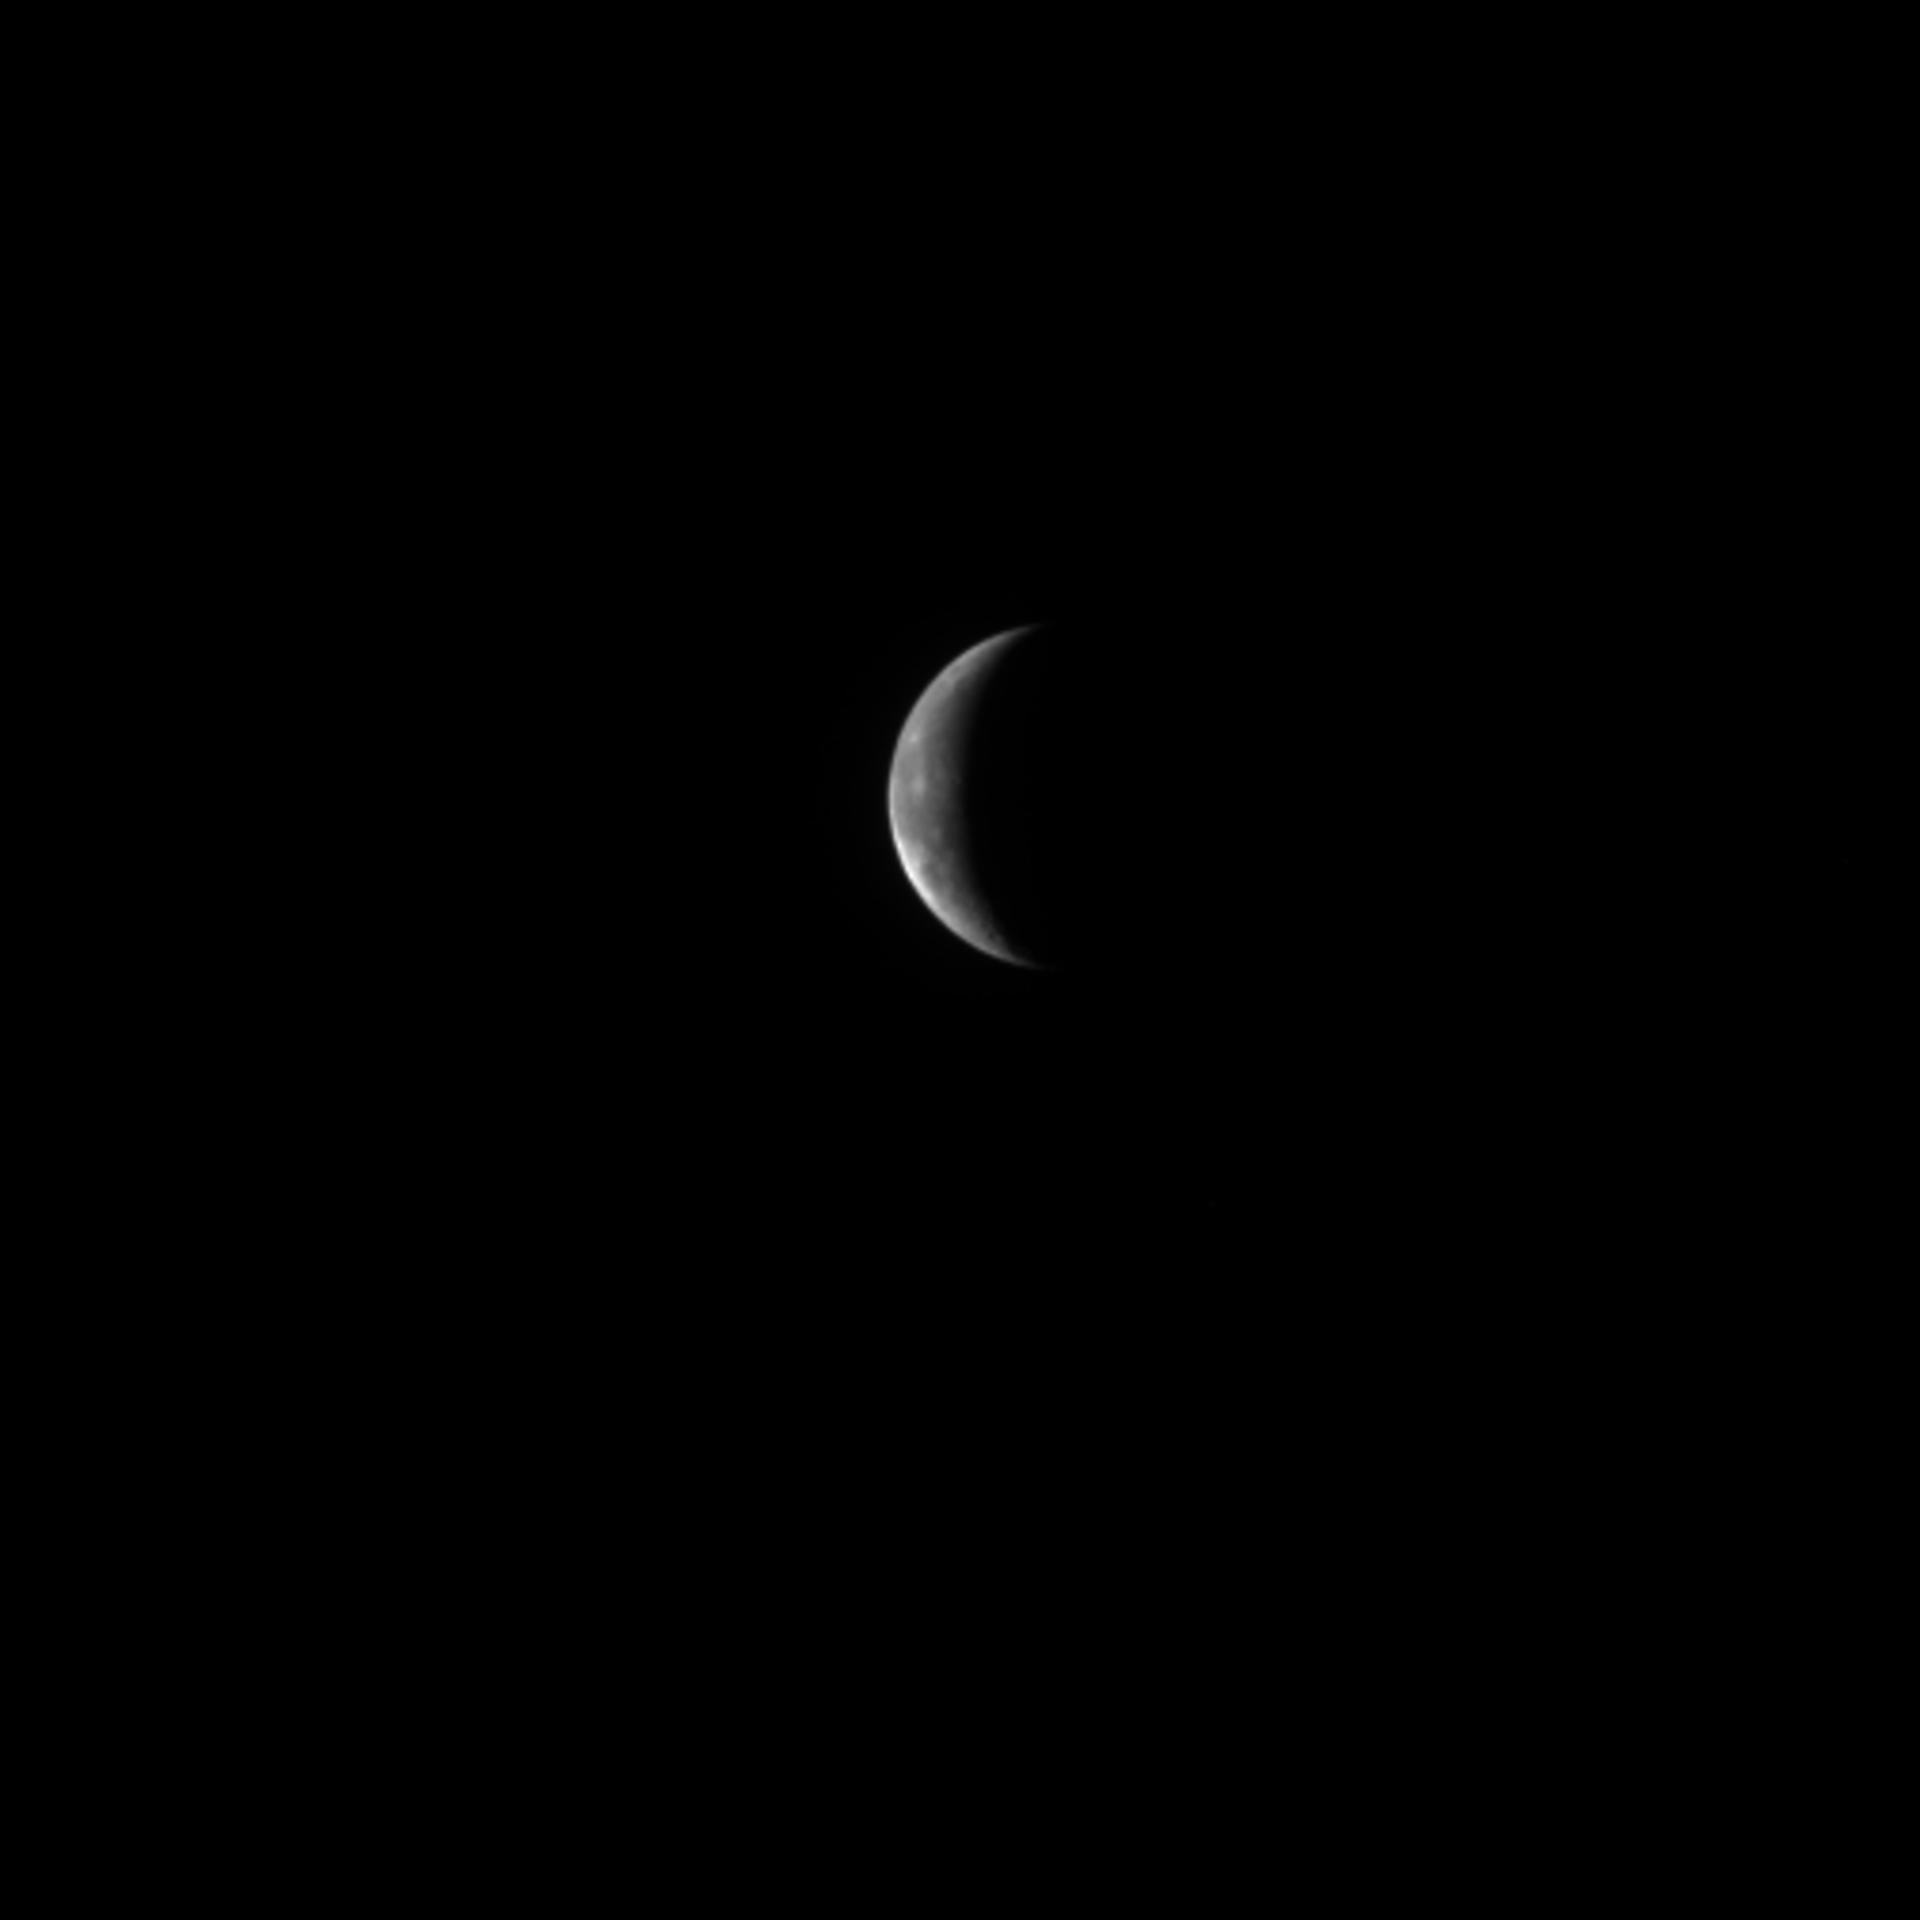 Rosettas Blick auf den Mond  um 13:20 MEZ